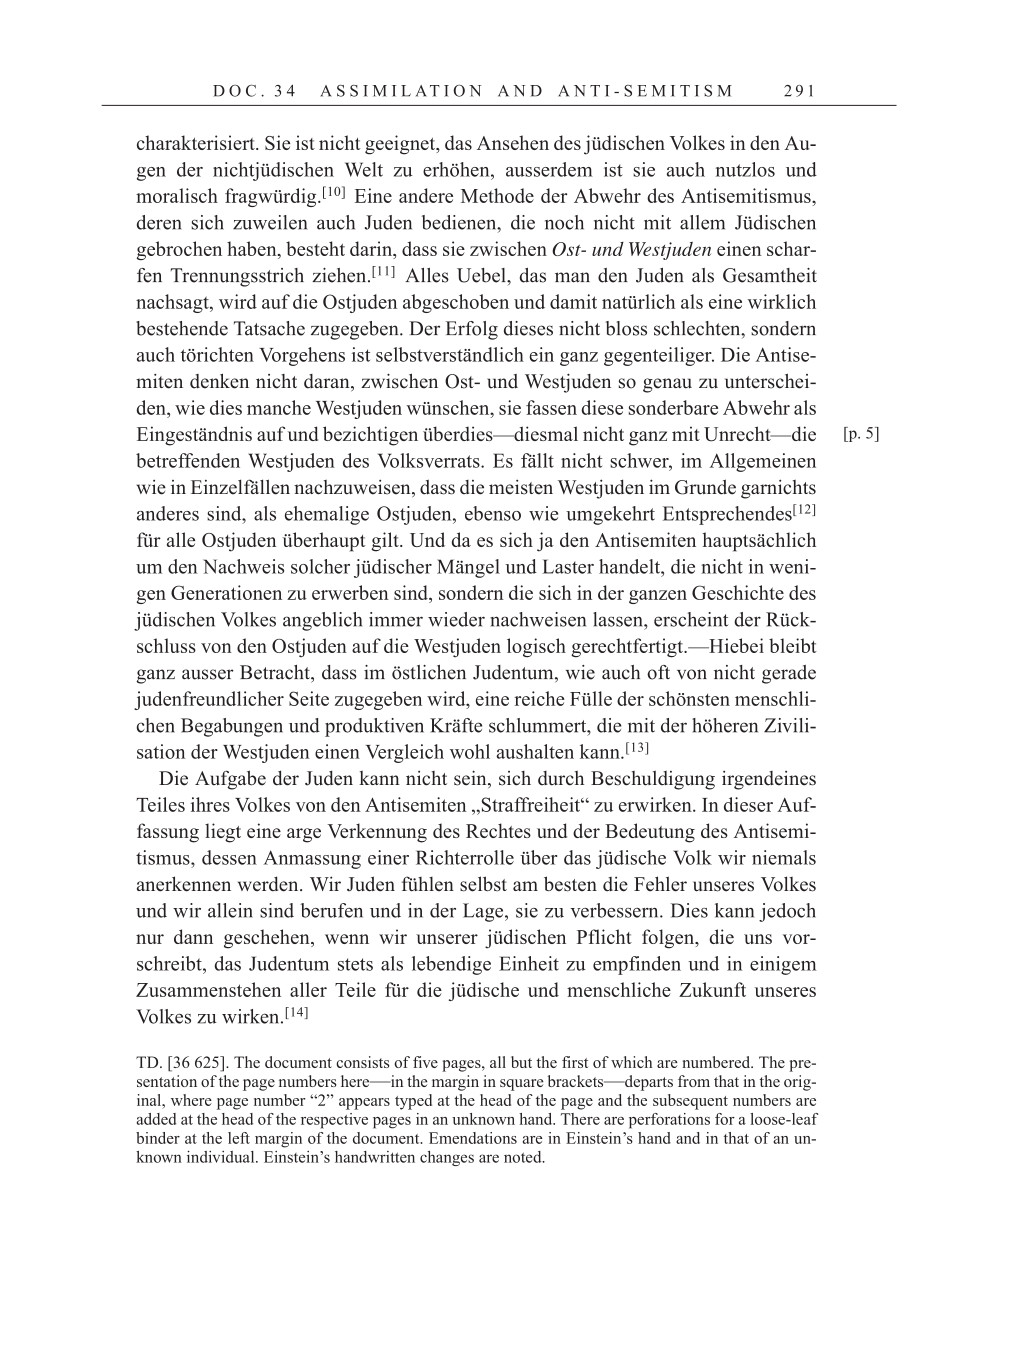 Volume 7: The Berlin Years: Writings, 1918-1921 page 291